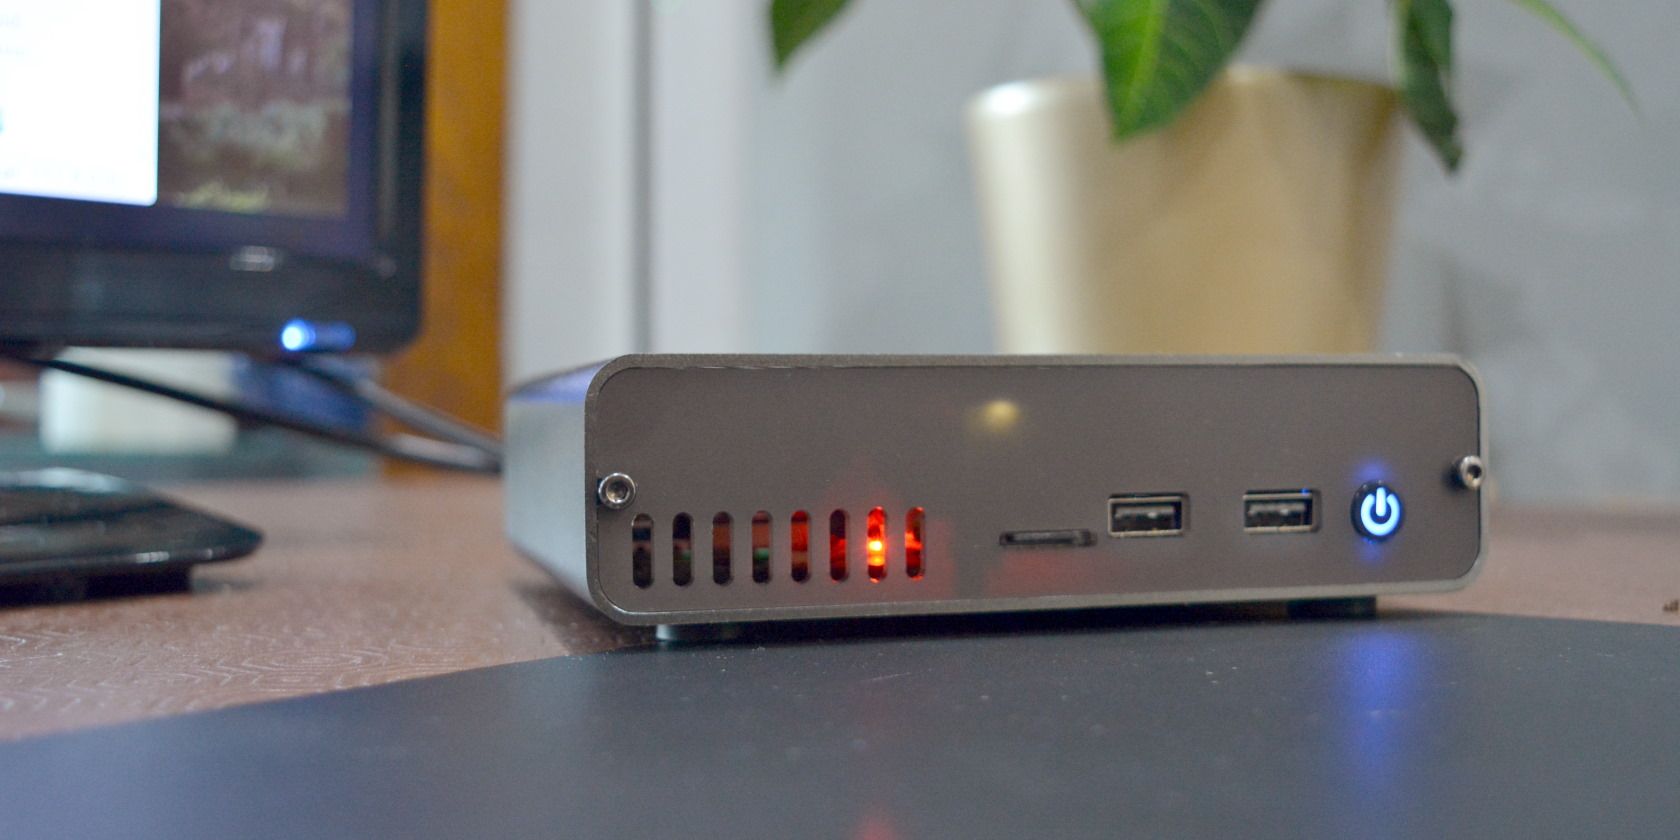 muo review deskpi featured - Come costruire un server cloud Raspberry Pi con ownCloud